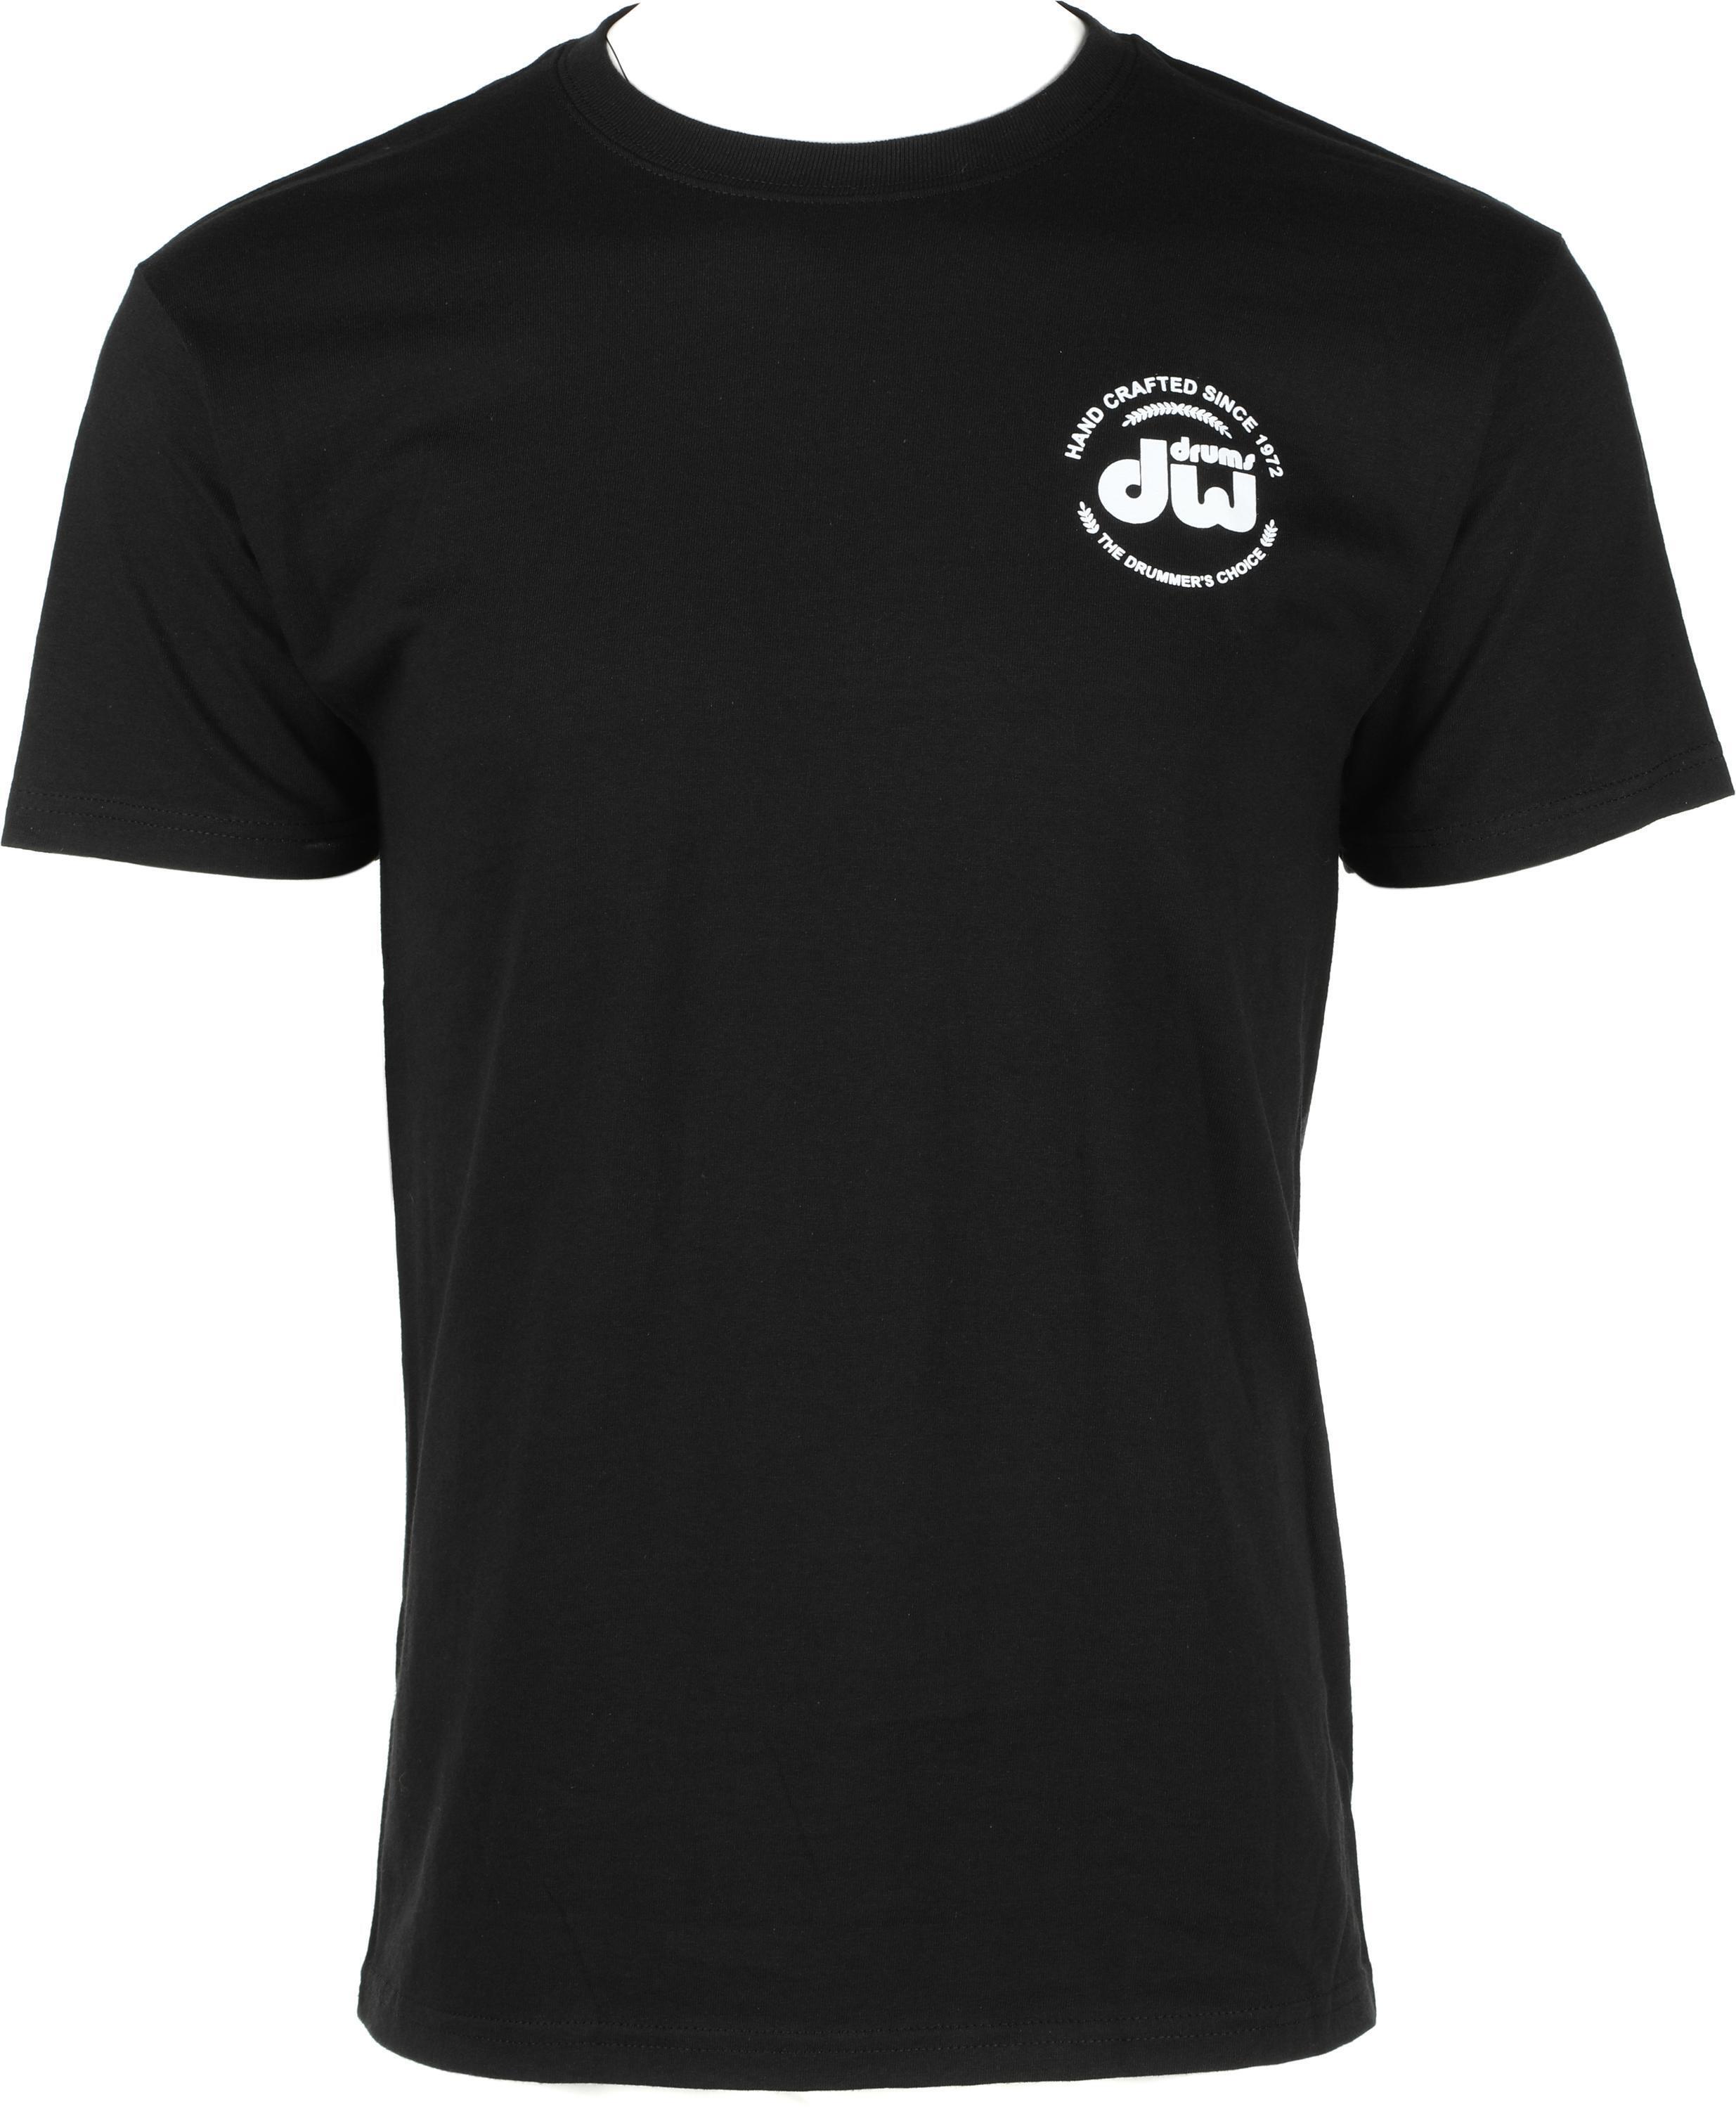 Bundled Item: DW Corporate Logo T-shirt - XX-Large